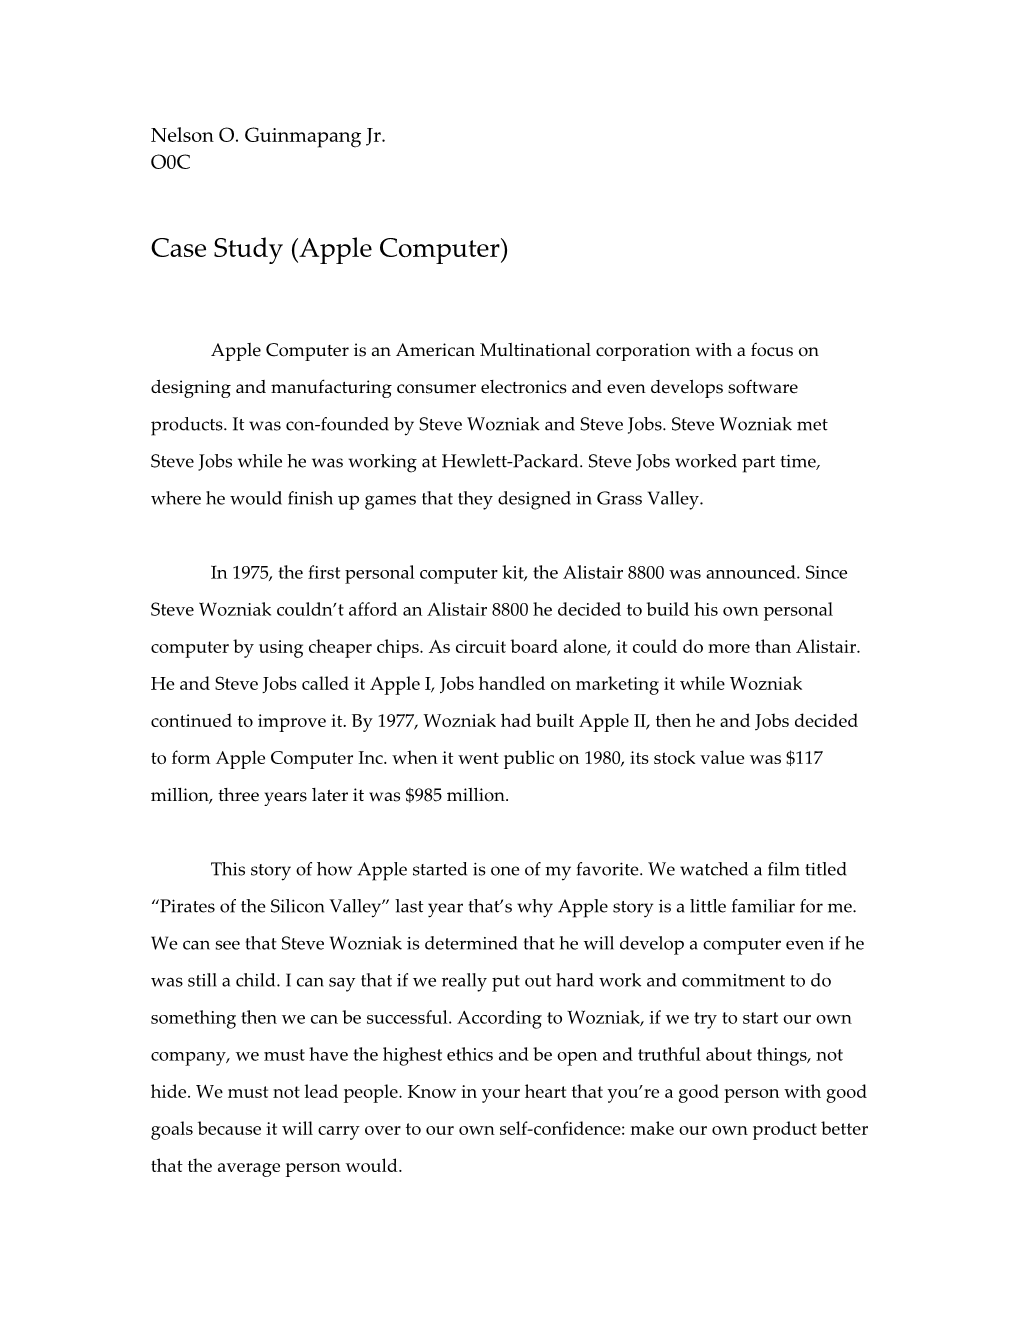 Case Study (Apple Computer)